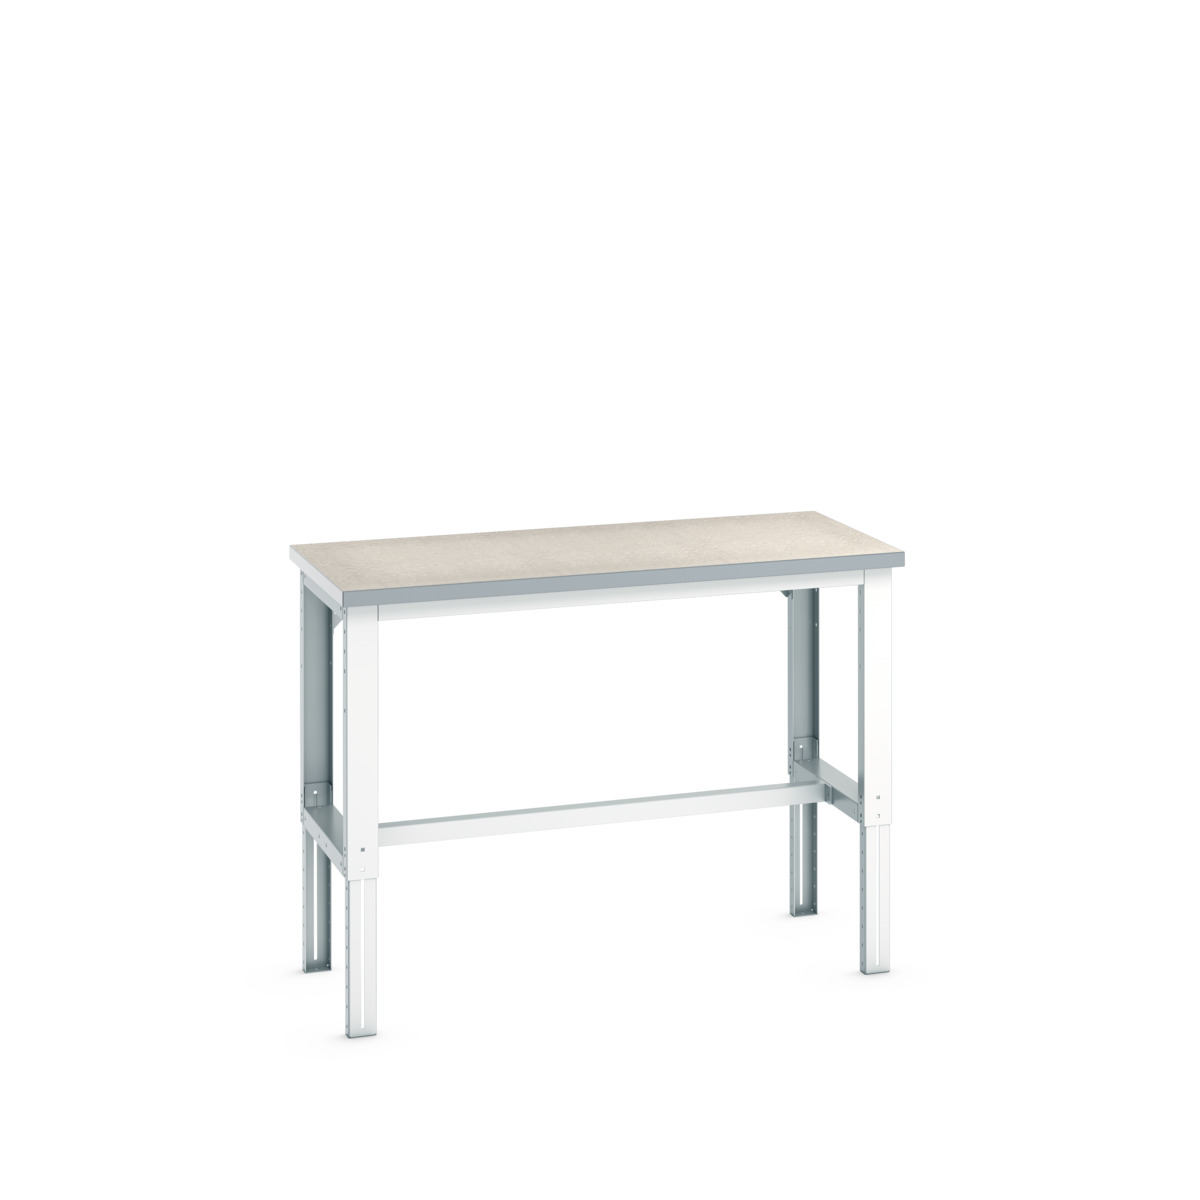 41003120.16V - cubio framework bench adj height (lino)